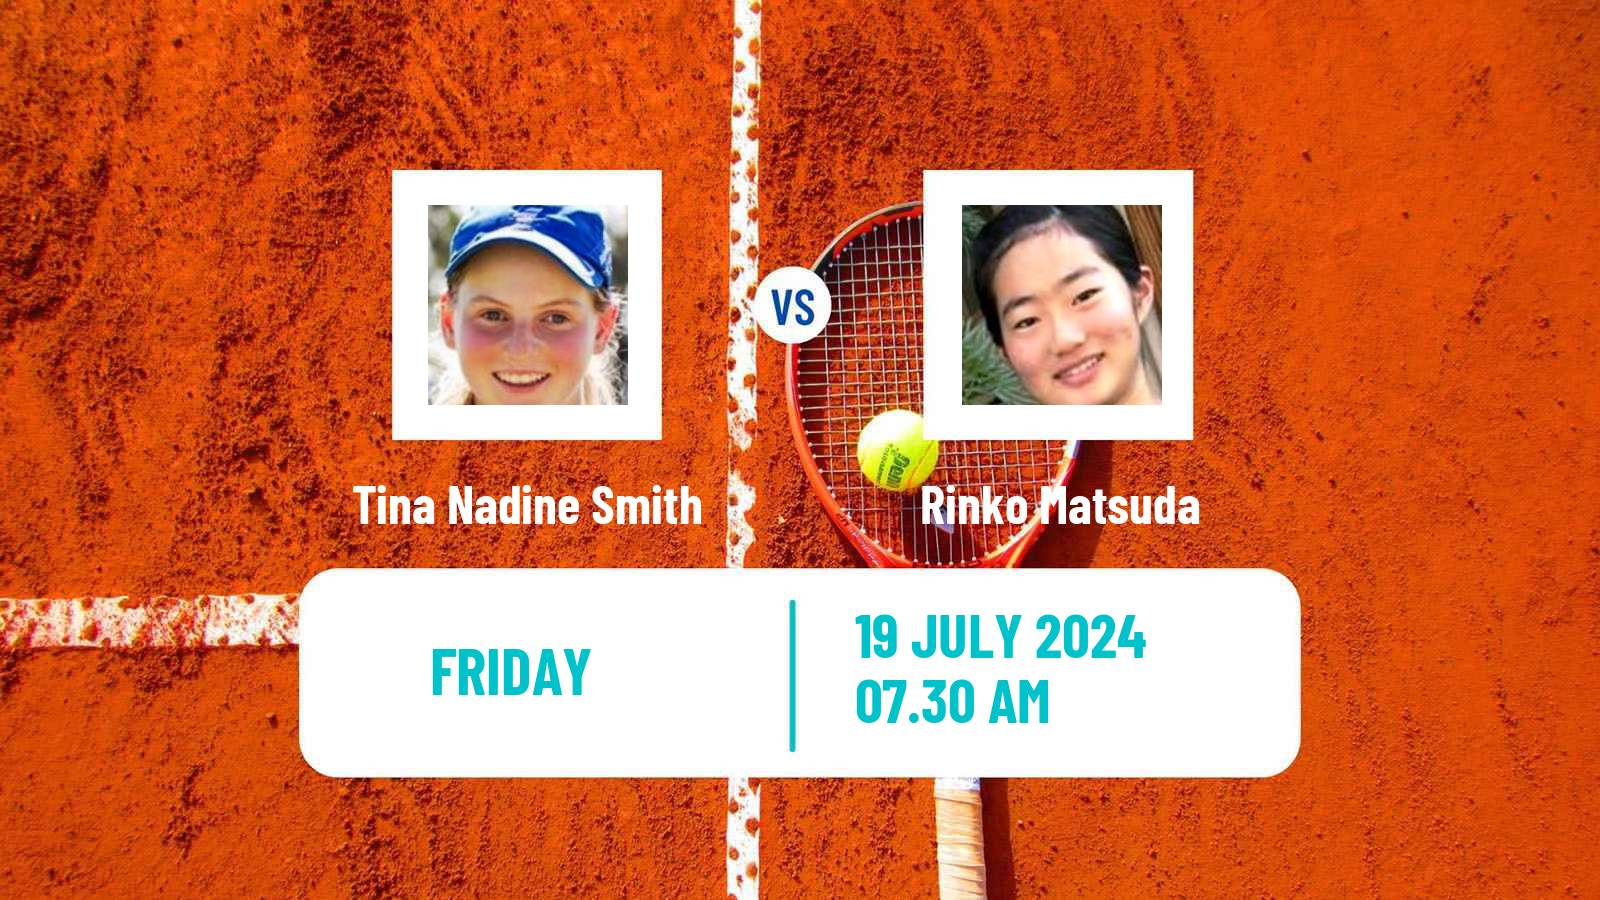 Tennis ITF W15 Casablanca Women Tina Nadine Smith - Rinko Matsuda